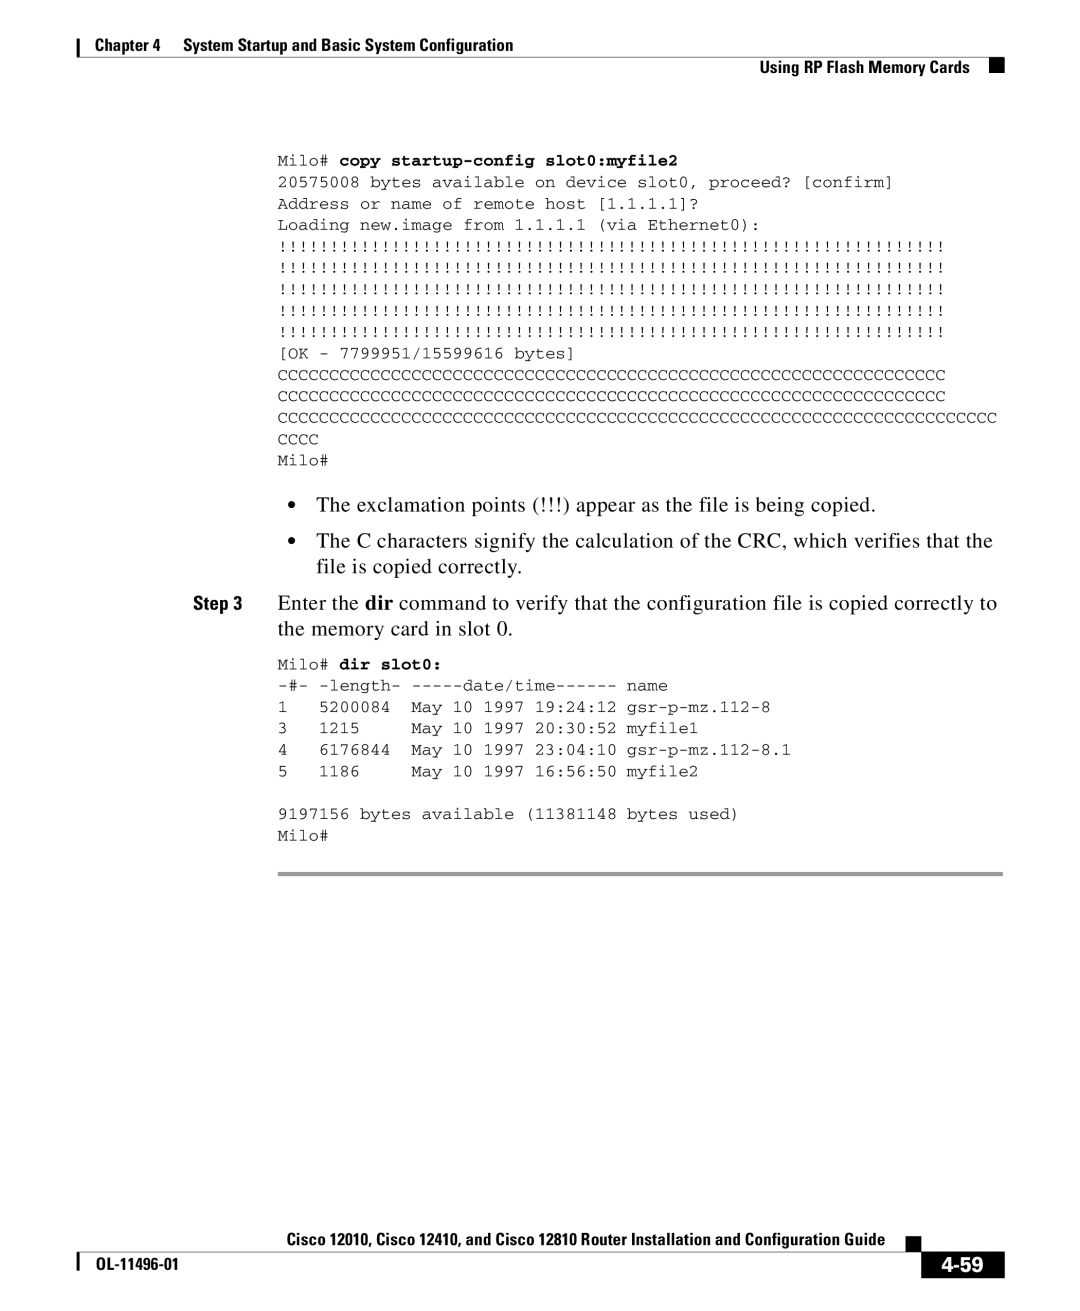 Cisco Systems 12410, 12010, 12810 manual Milo# copy startup-config slot0myfile2 